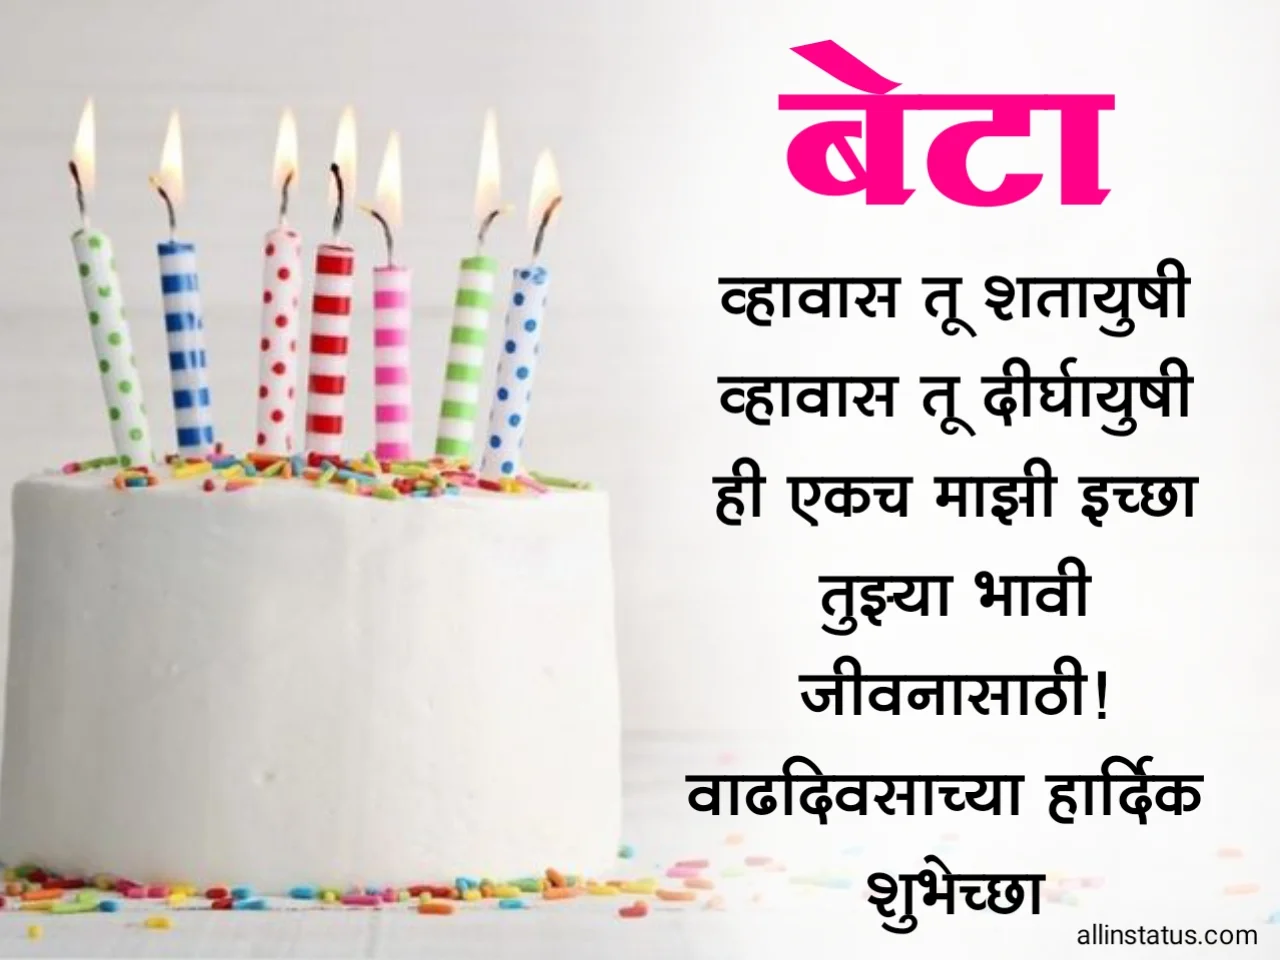 Happy Birthday wishes for son in marathi